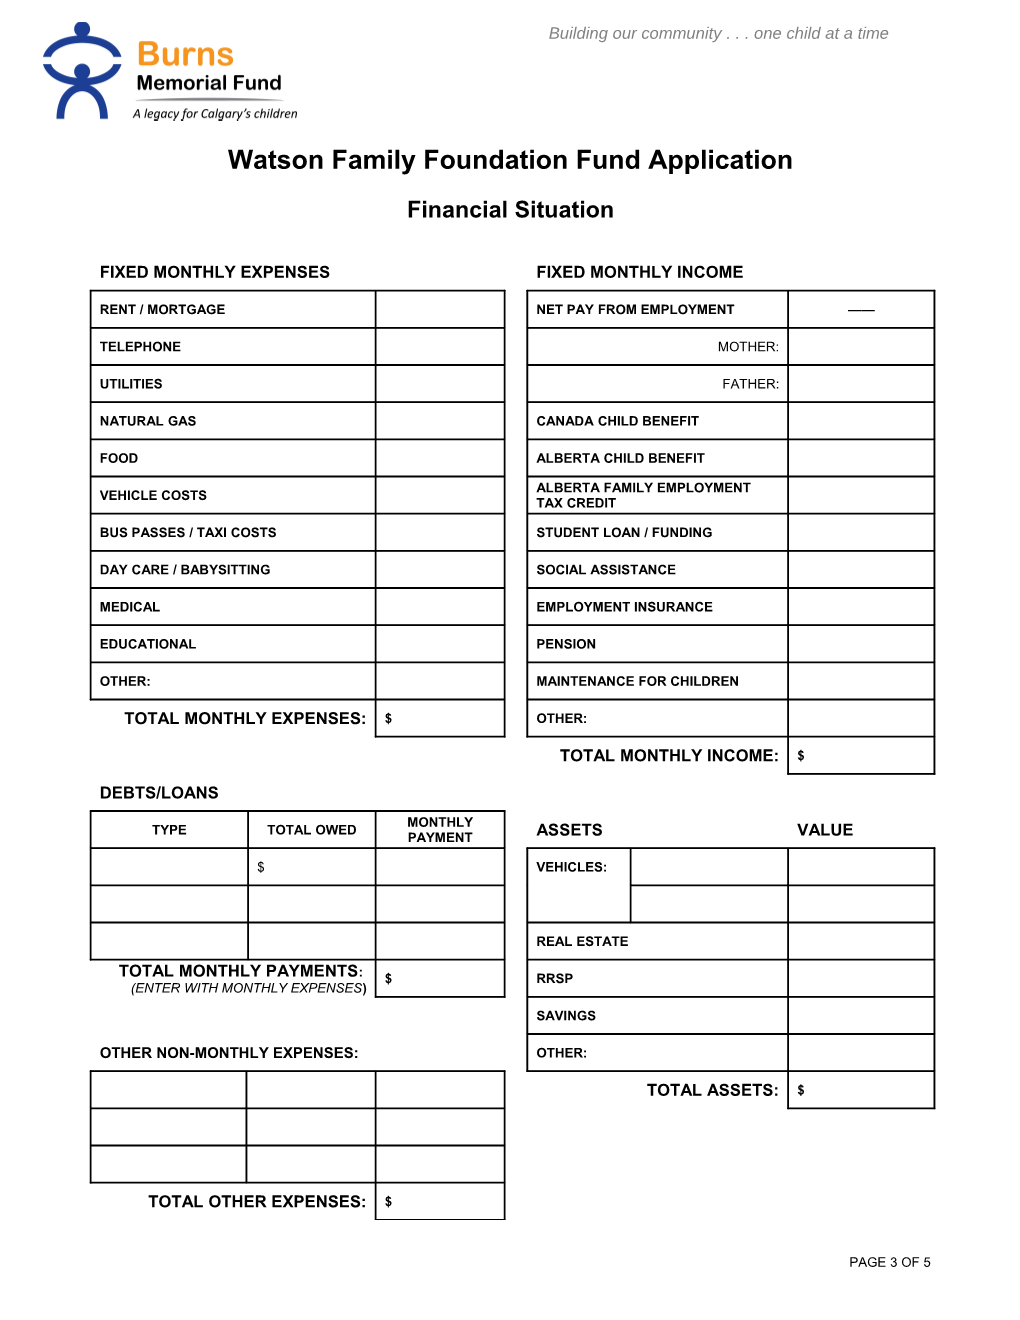 Watson Family Foundation Fund Application